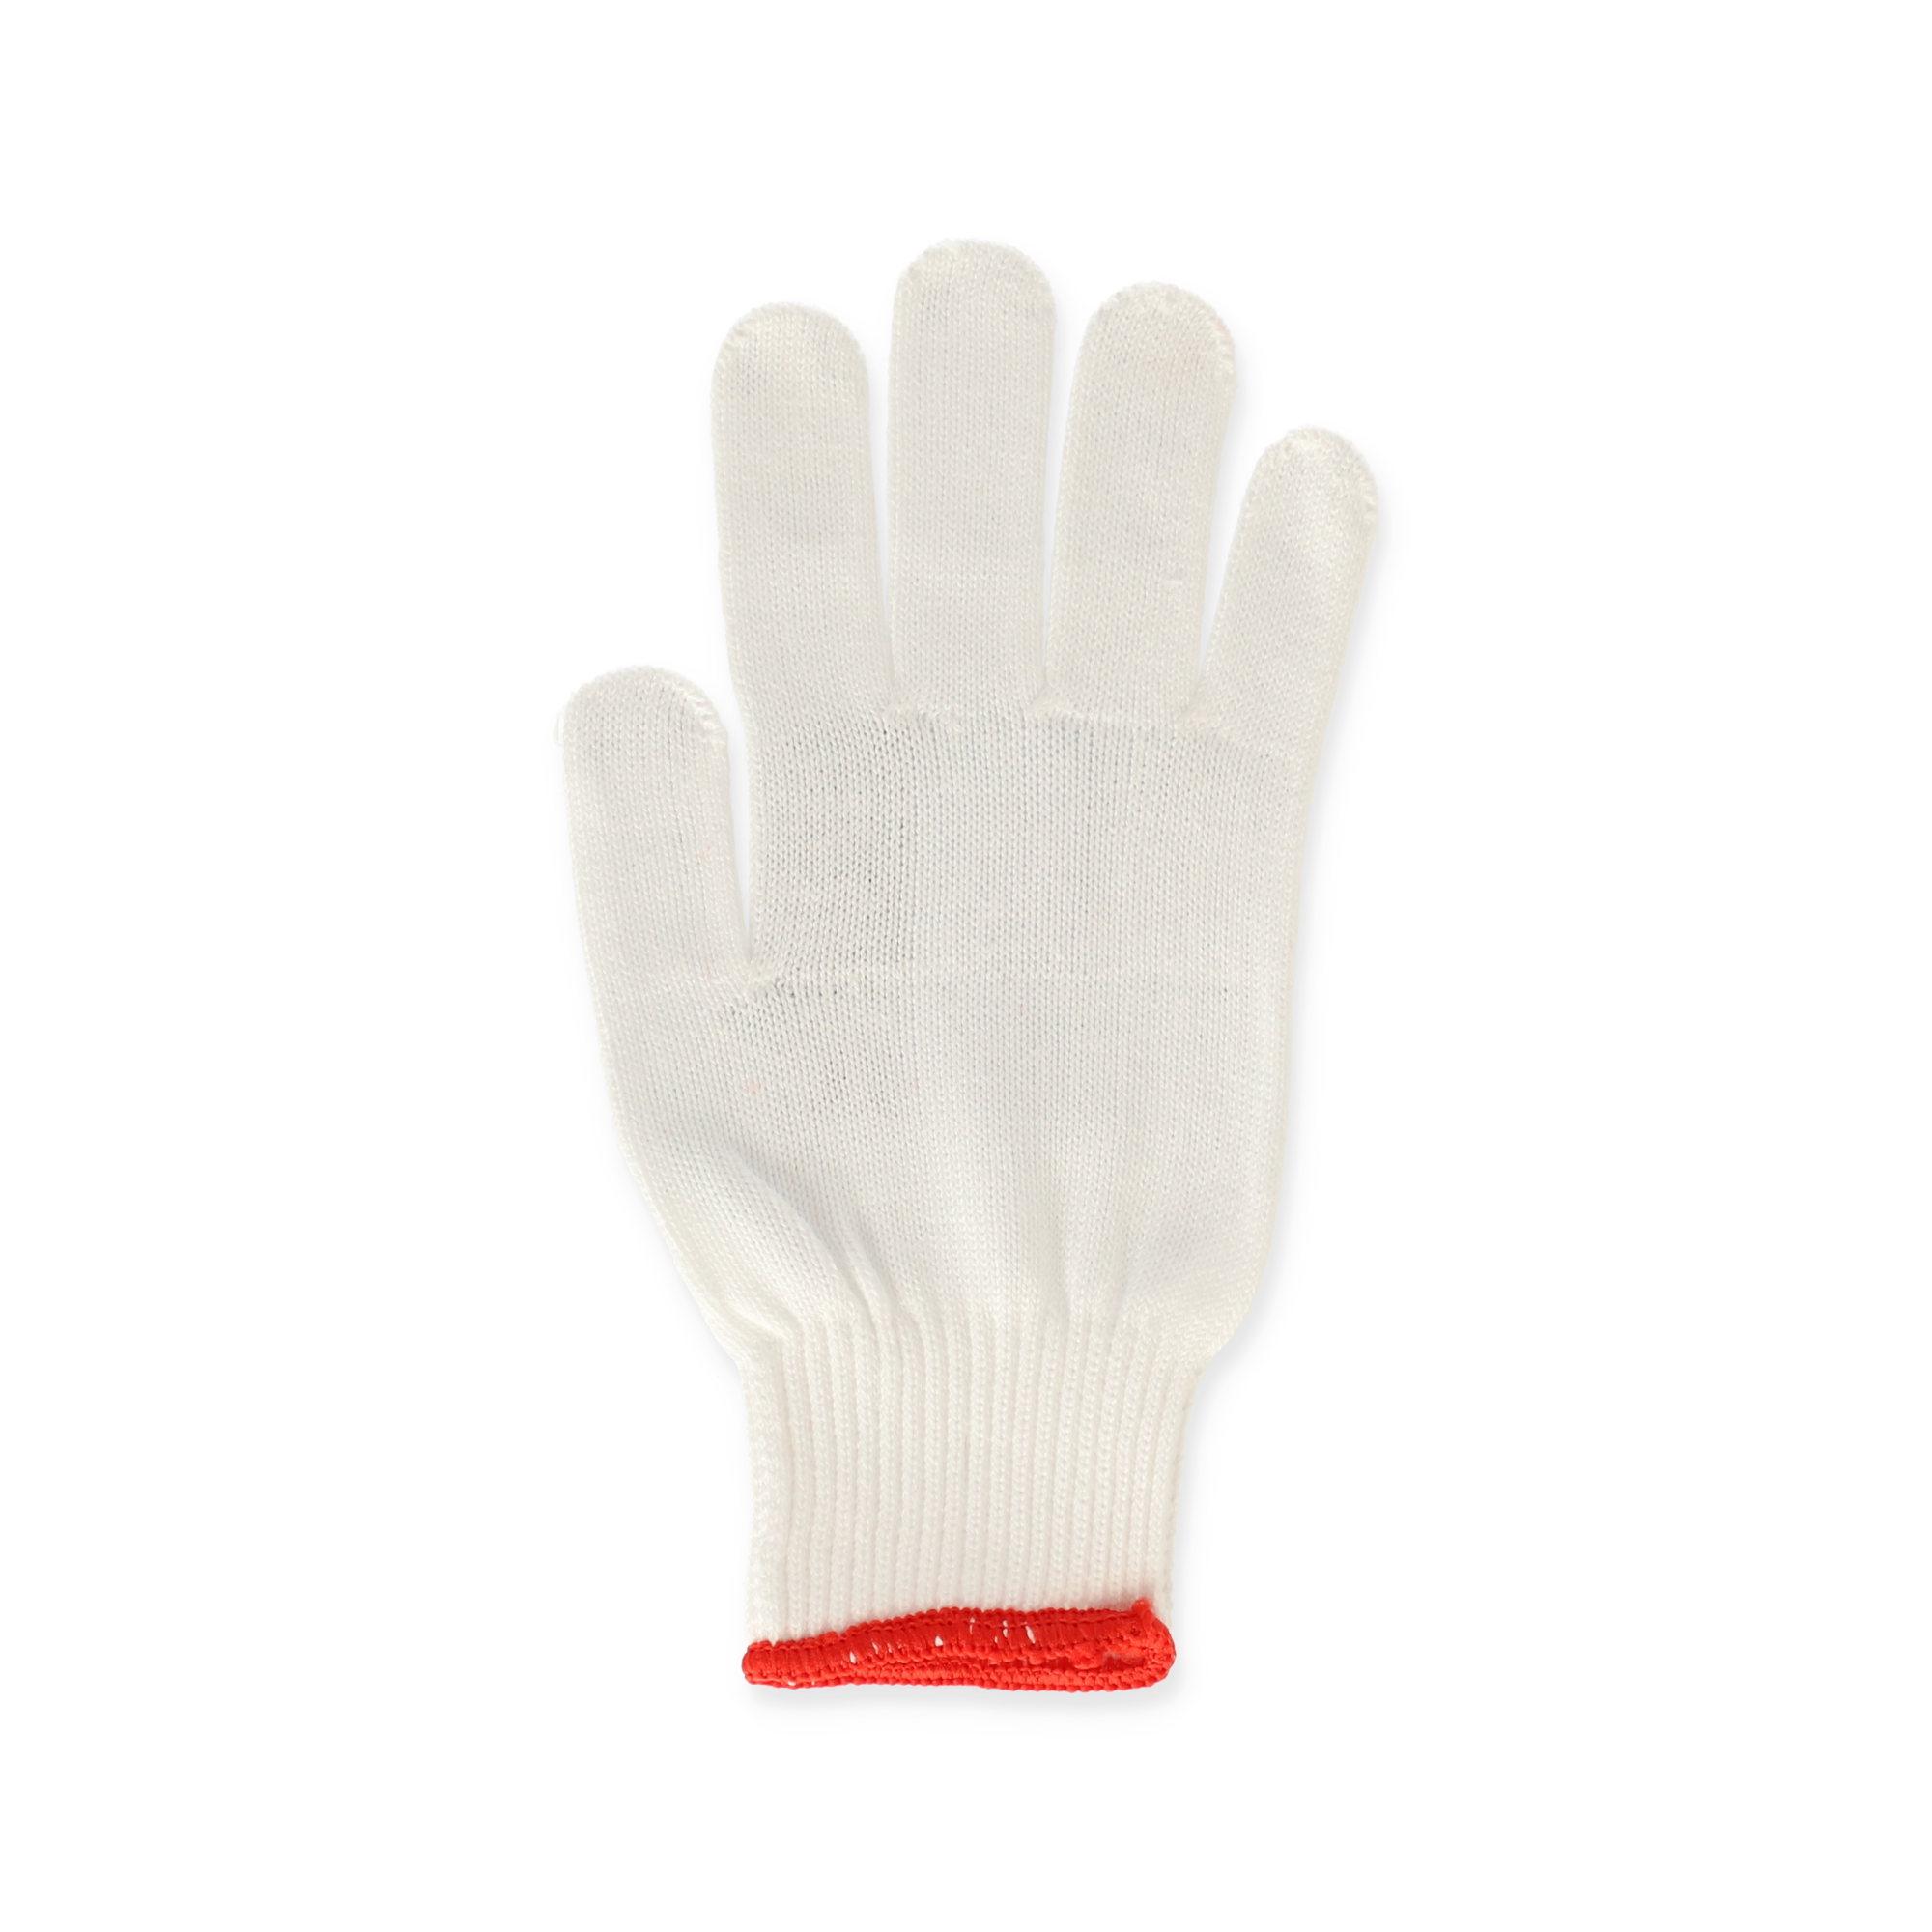 Universal-Handschuhe weiß Gr. 9/L 10 Stück + product picture